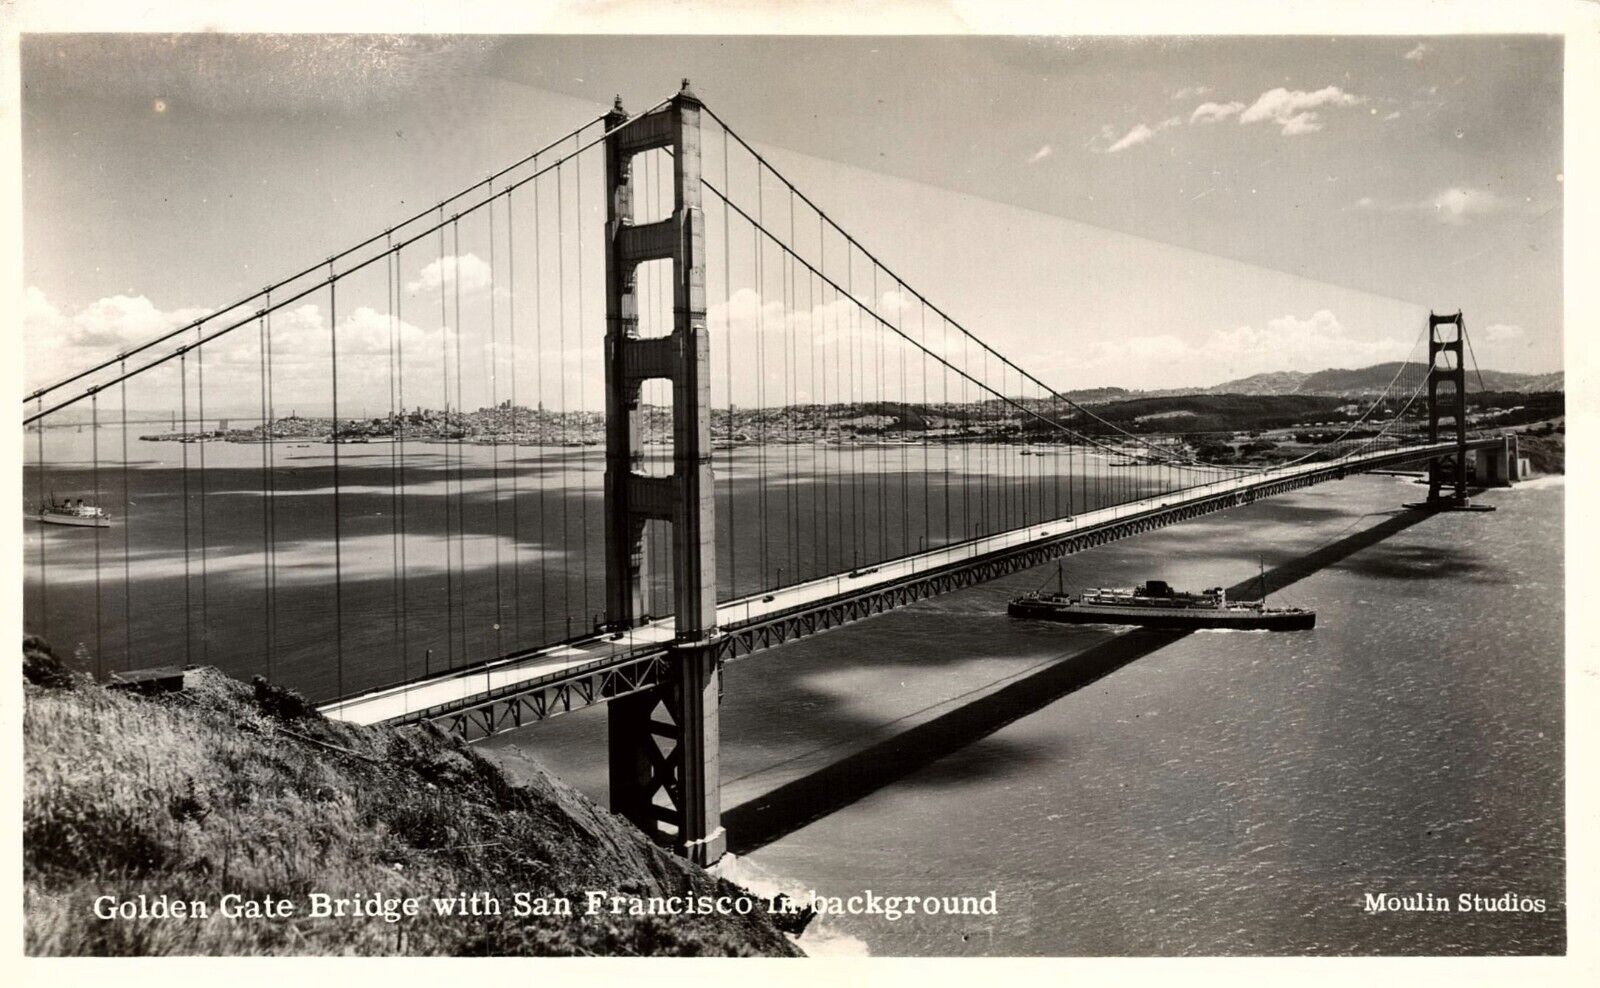 SAN FRANCISCO RPPC - GOLDEN GATE BRIDGE - SAN FRANCISCO BRIDGE - MOULIN STUDIOS